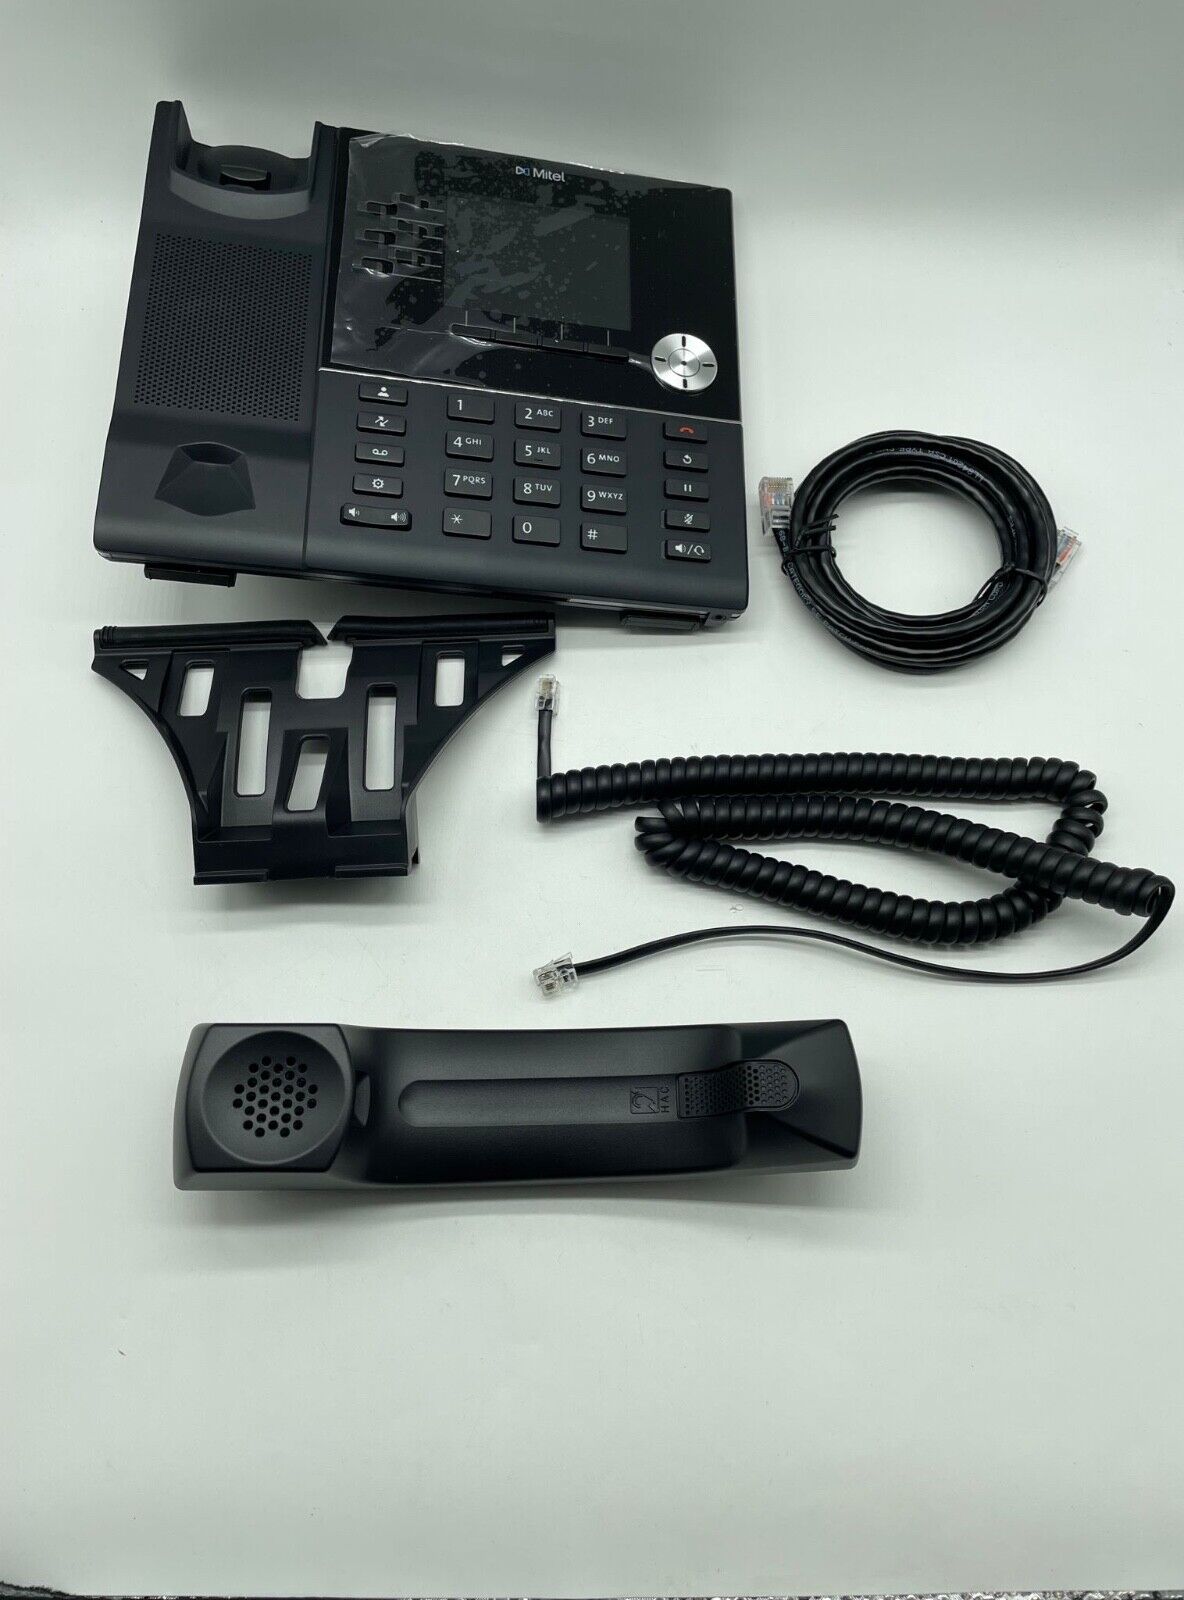 Mitel 6920 Gigabit IP Phone (50006767) - Brand New w/1 Year Warranty